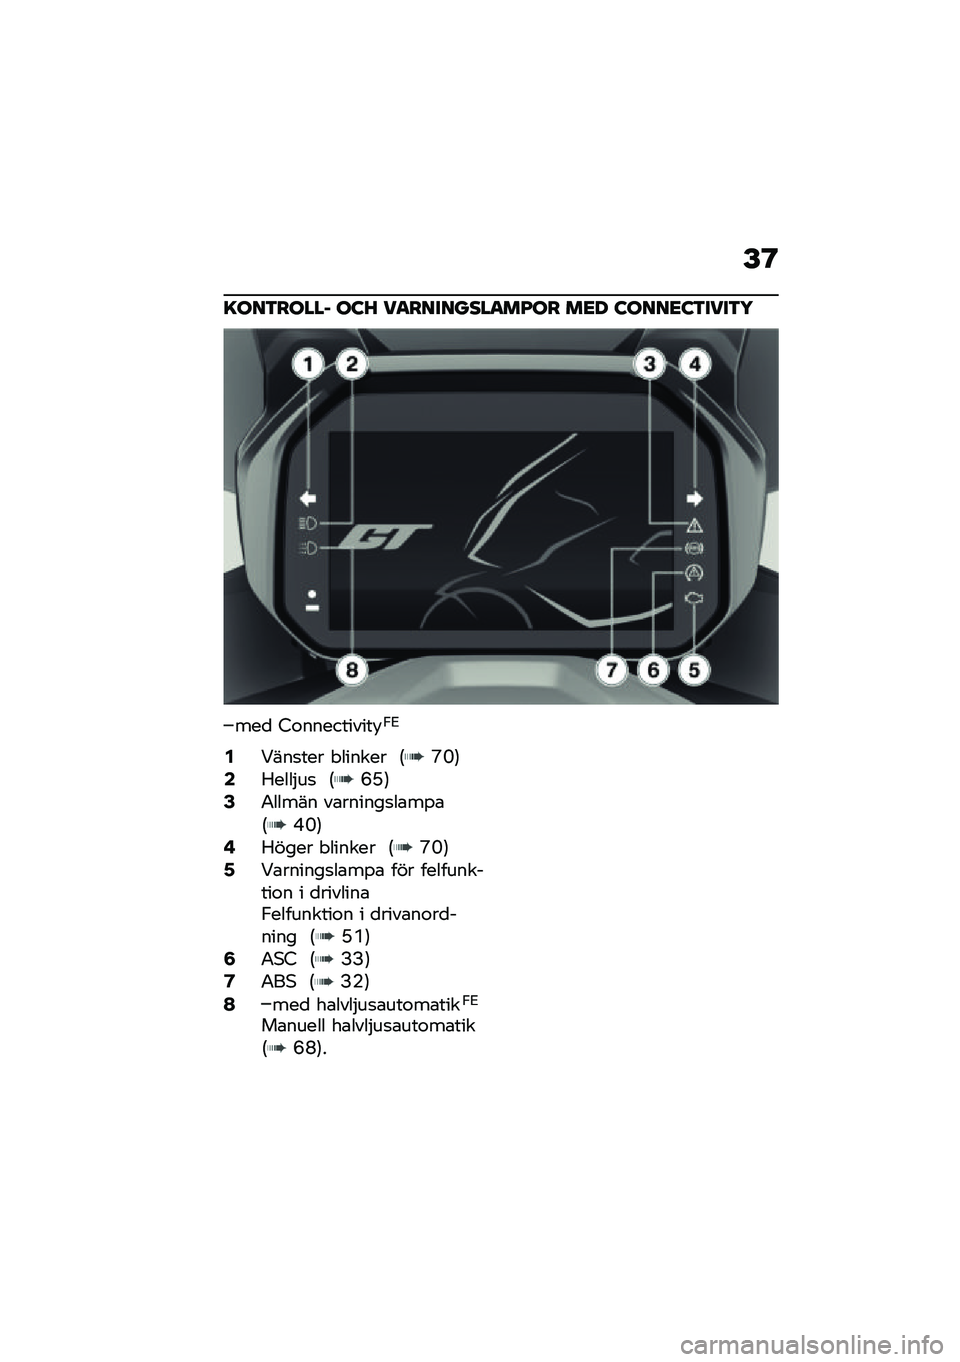 BMW MOTORRAD C 400 GT 2021  Instruktionsbok (in Swedish) �F�@
�=���3�����, ��:�A ��
��������
��I�� ��<� �:����<�:�3����3�5
���
 �8�\f����������!�0�6
�2�9���
��� � ������ �:�P�N�;�4�5����$��
 �:�F�H�;�6�4�